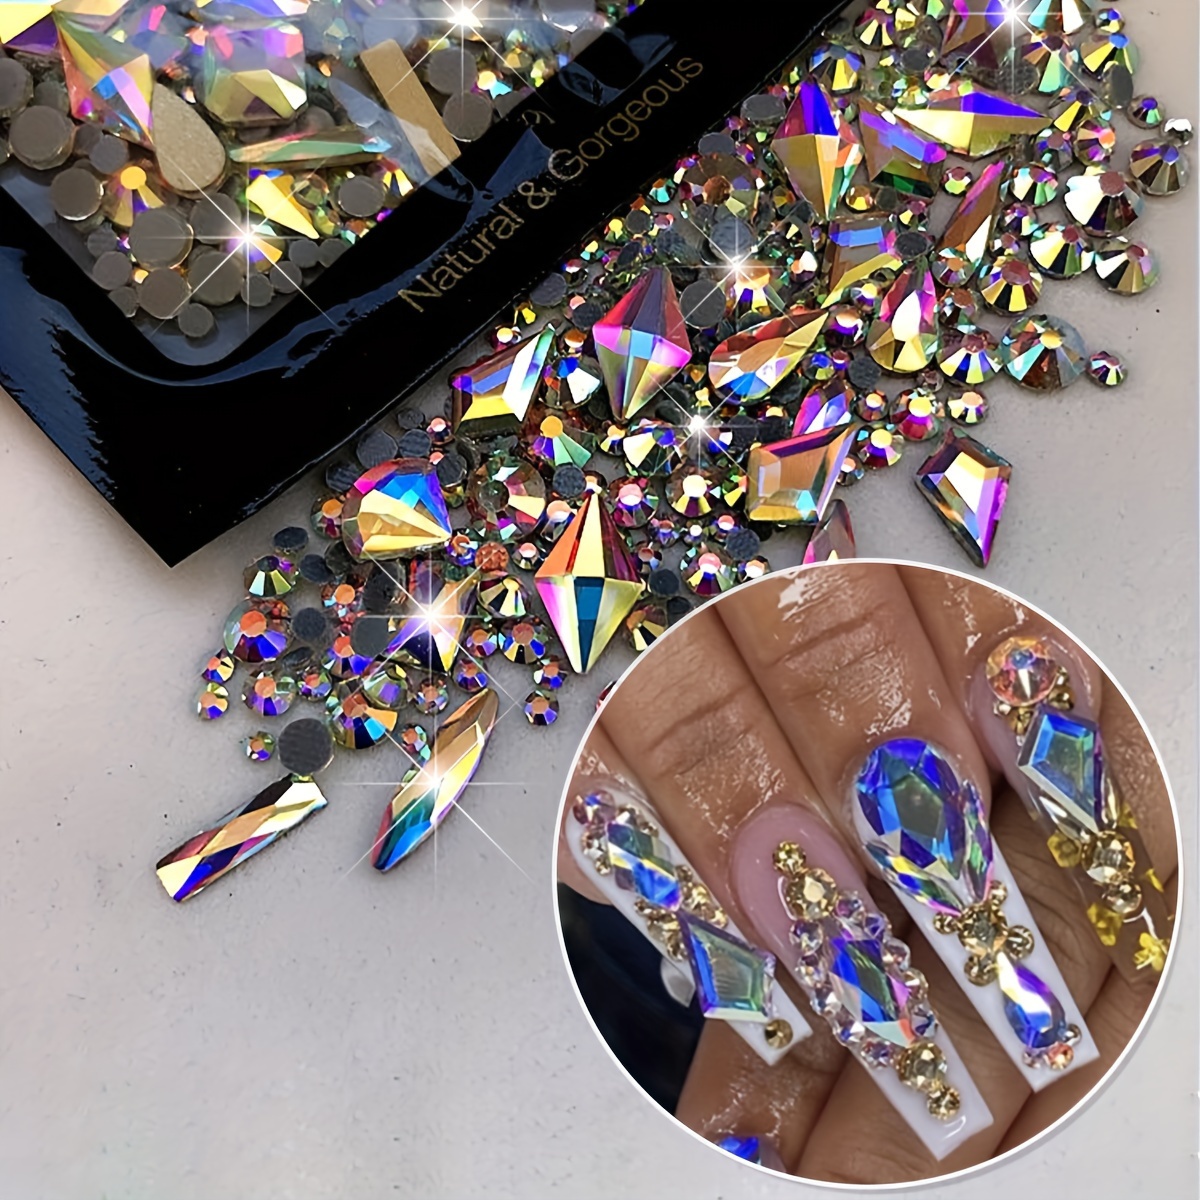 Fourone 1111fourone 240 Pcs/Set AB Diamonds for Nails Rhinestones 12 Shapes Flatback 3D Rhinestones for Nails Art Jewelry, Other